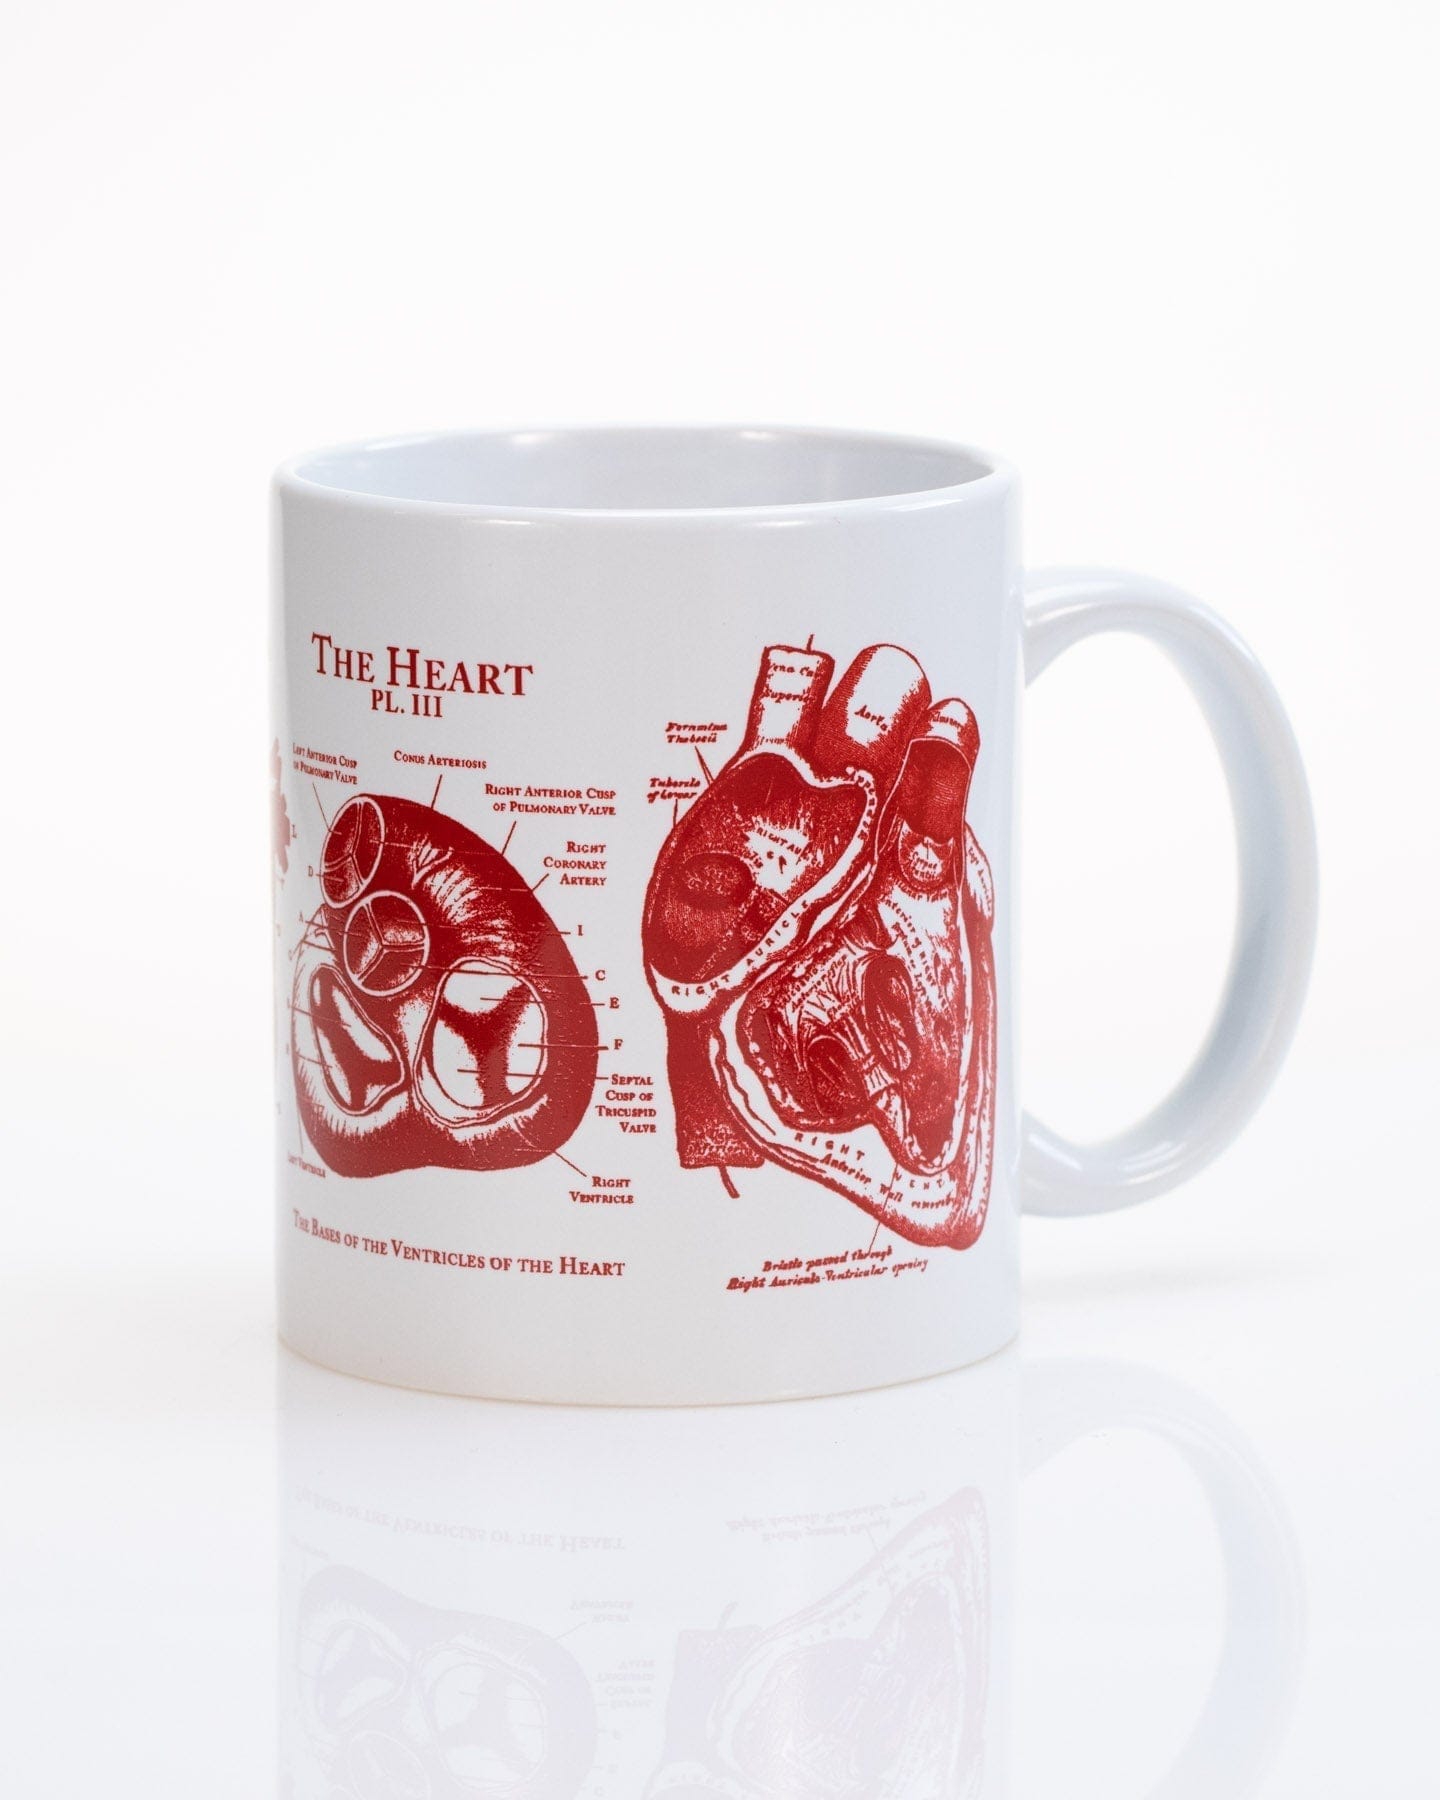 Buy The Earth Store Coffee Mug Set of 6 Ceramic Mugs to Gift to